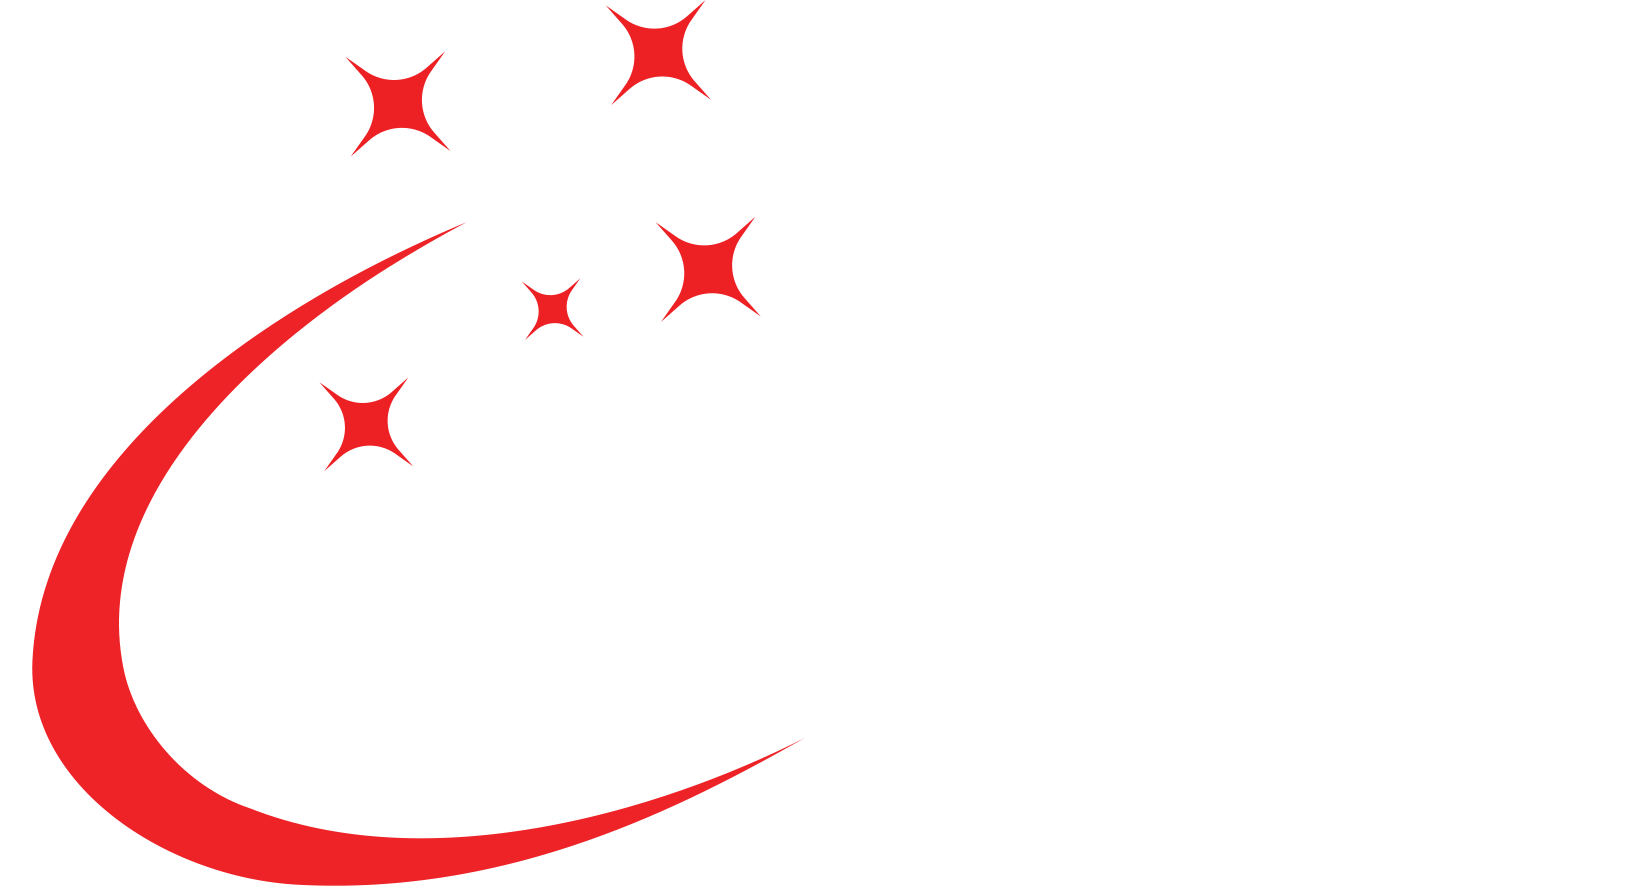 Southern Cross Caravans - Hybrid Caravans, Fixed Roof Caravans, Toy Haulers and more